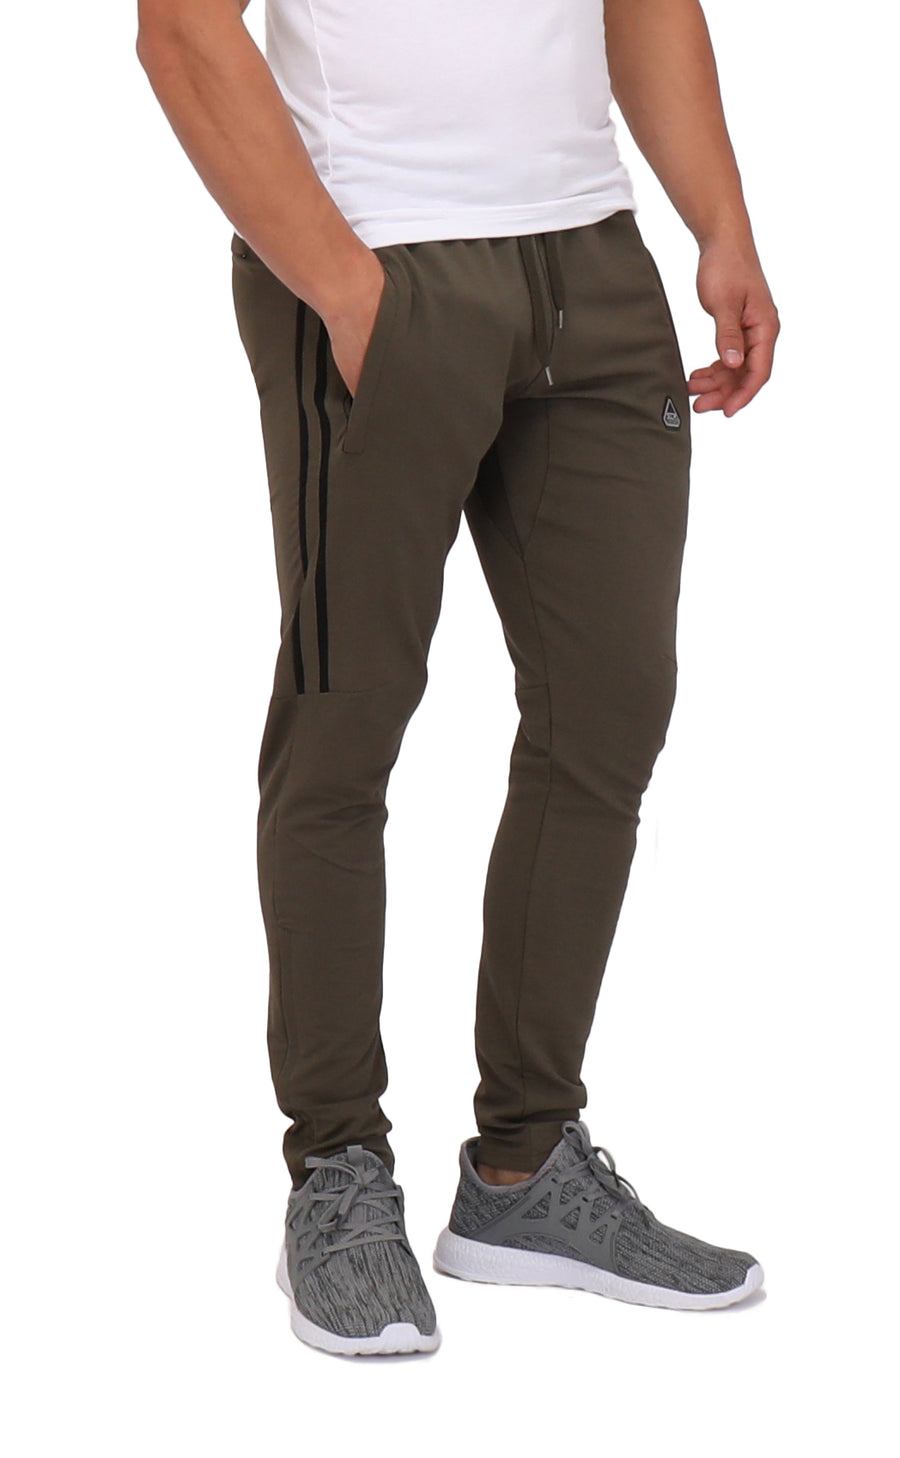  SCR SPORTSWEAR All-Day Comfort Ultimate Flex Men's Sweatpants  Training Pants Mens Casual Pants Tall Long 30/33/36 Inseam (S/34,  MDB/G-K916) : Clothing, Shoes & Jewelry